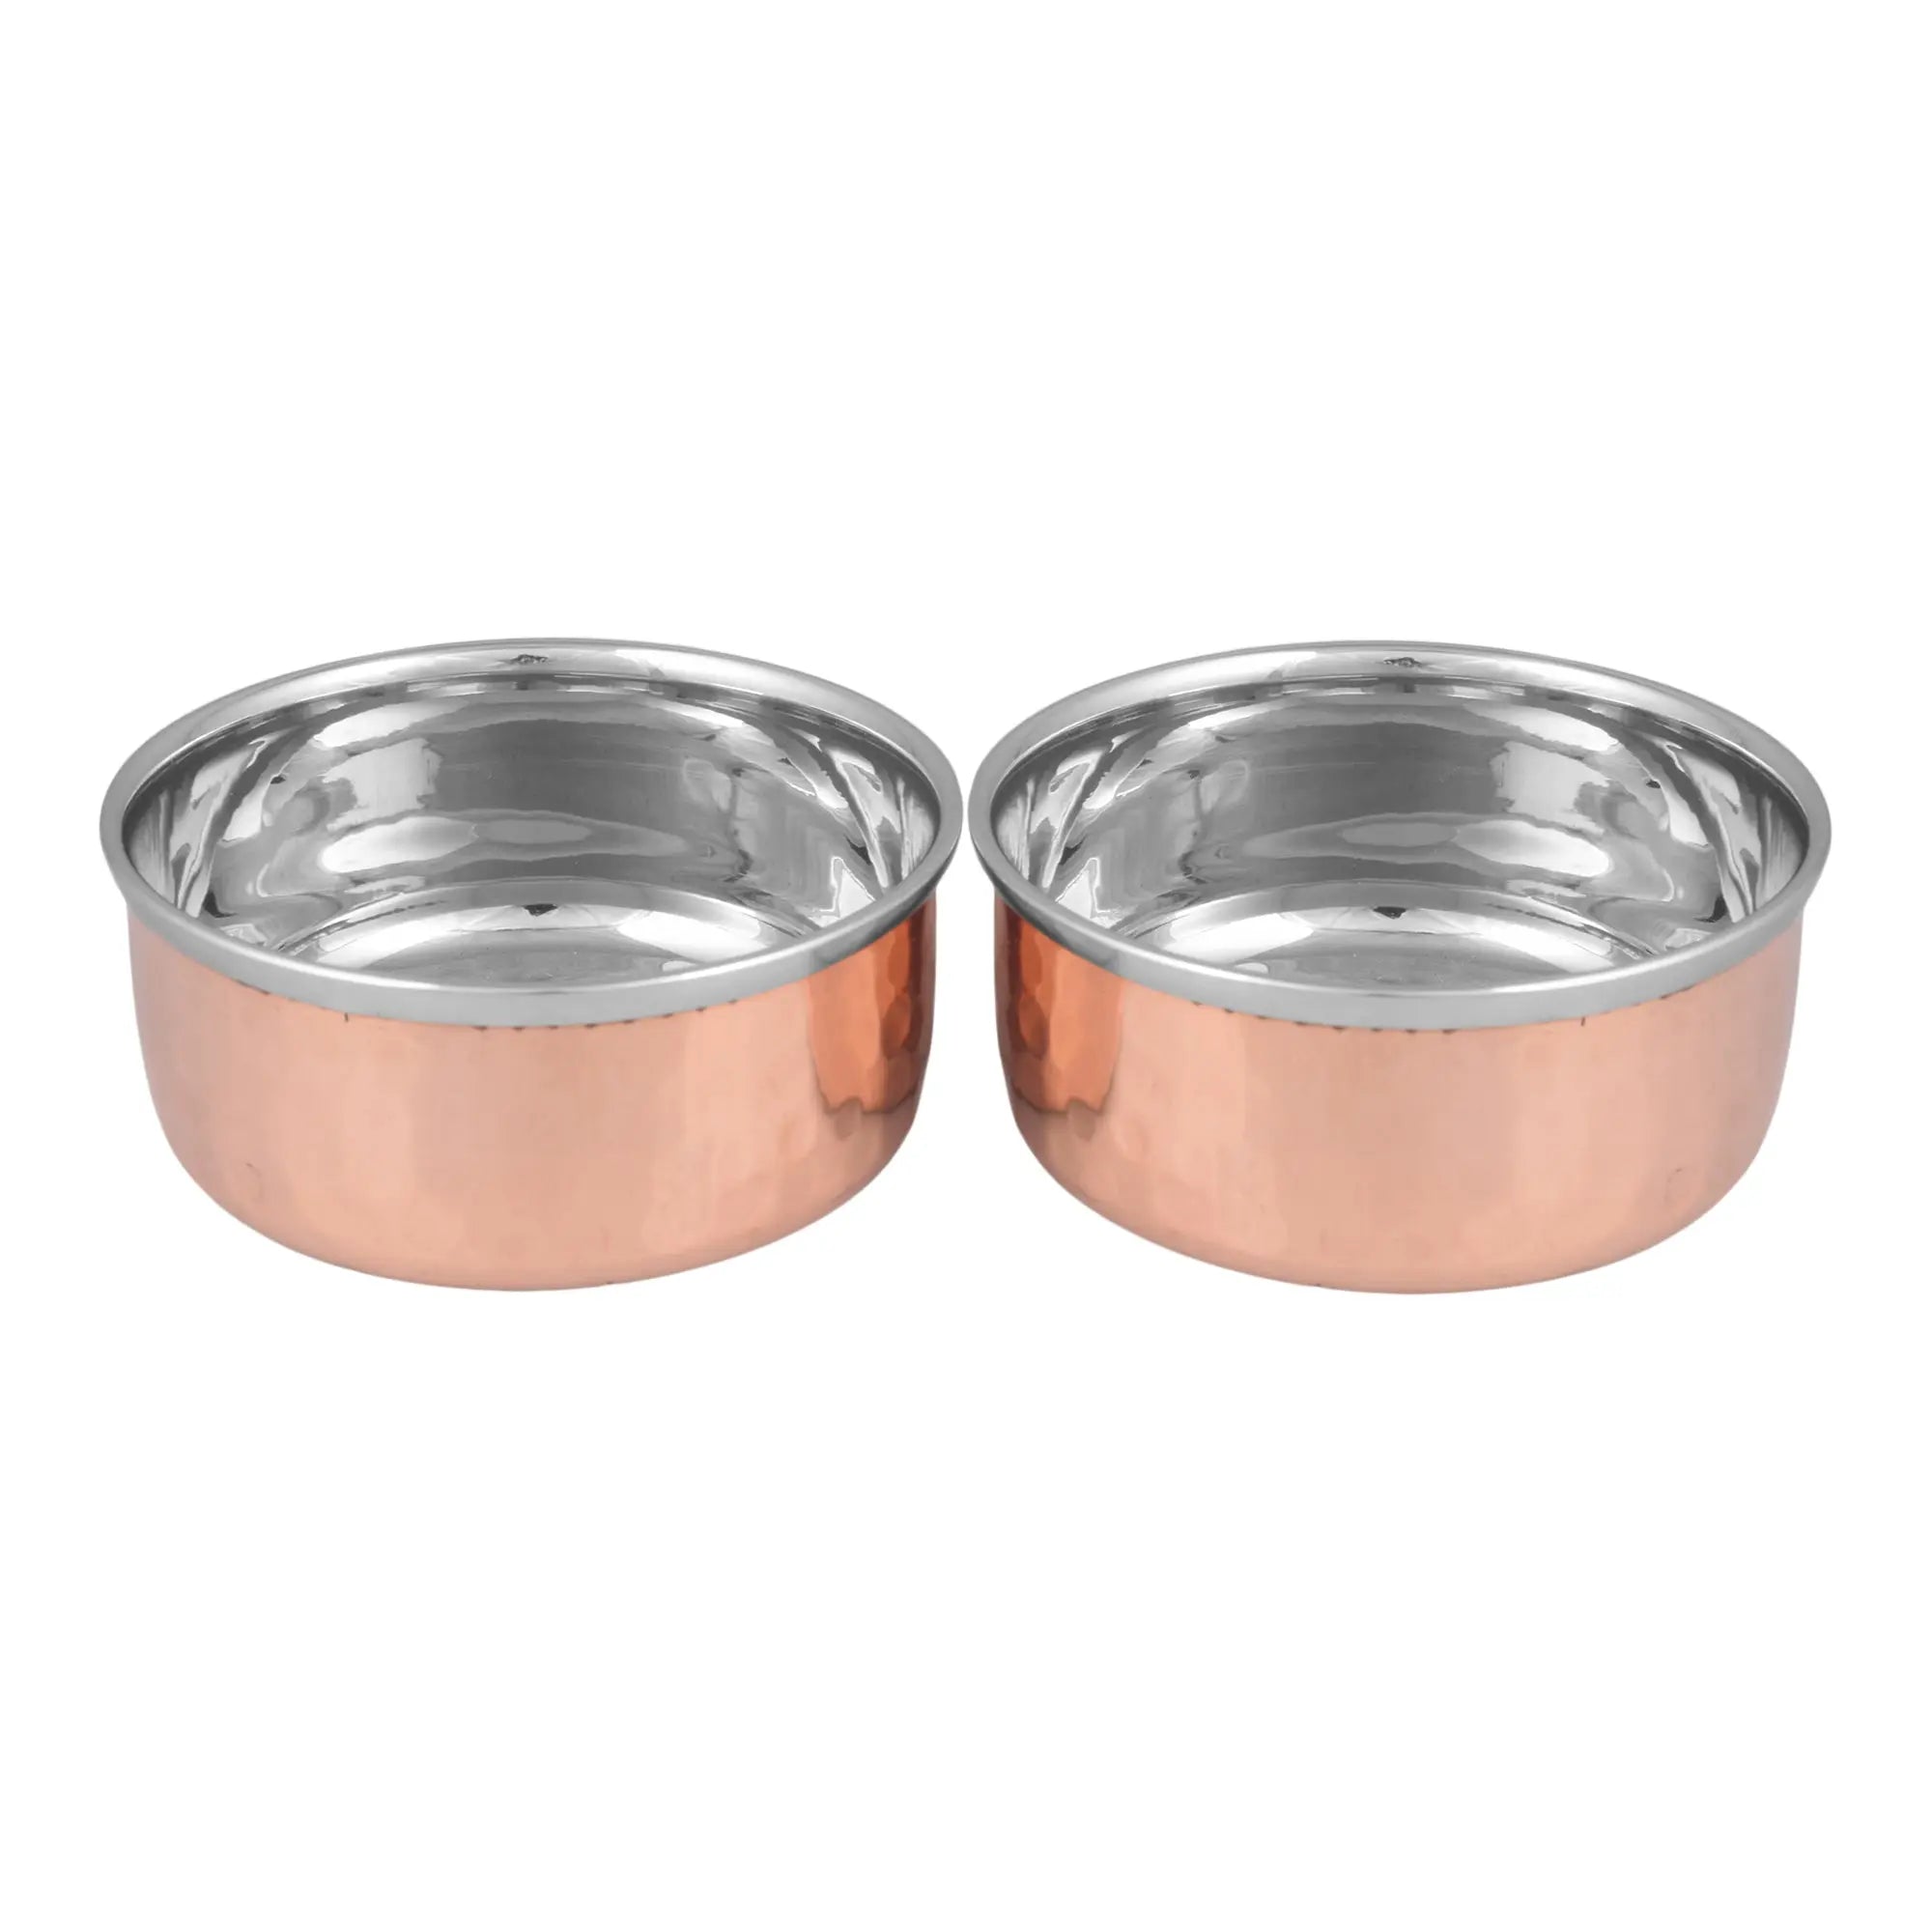 Crockery Wala And Company  Steel Copper Bowls - CROCKERY WALA AND COMPANY 